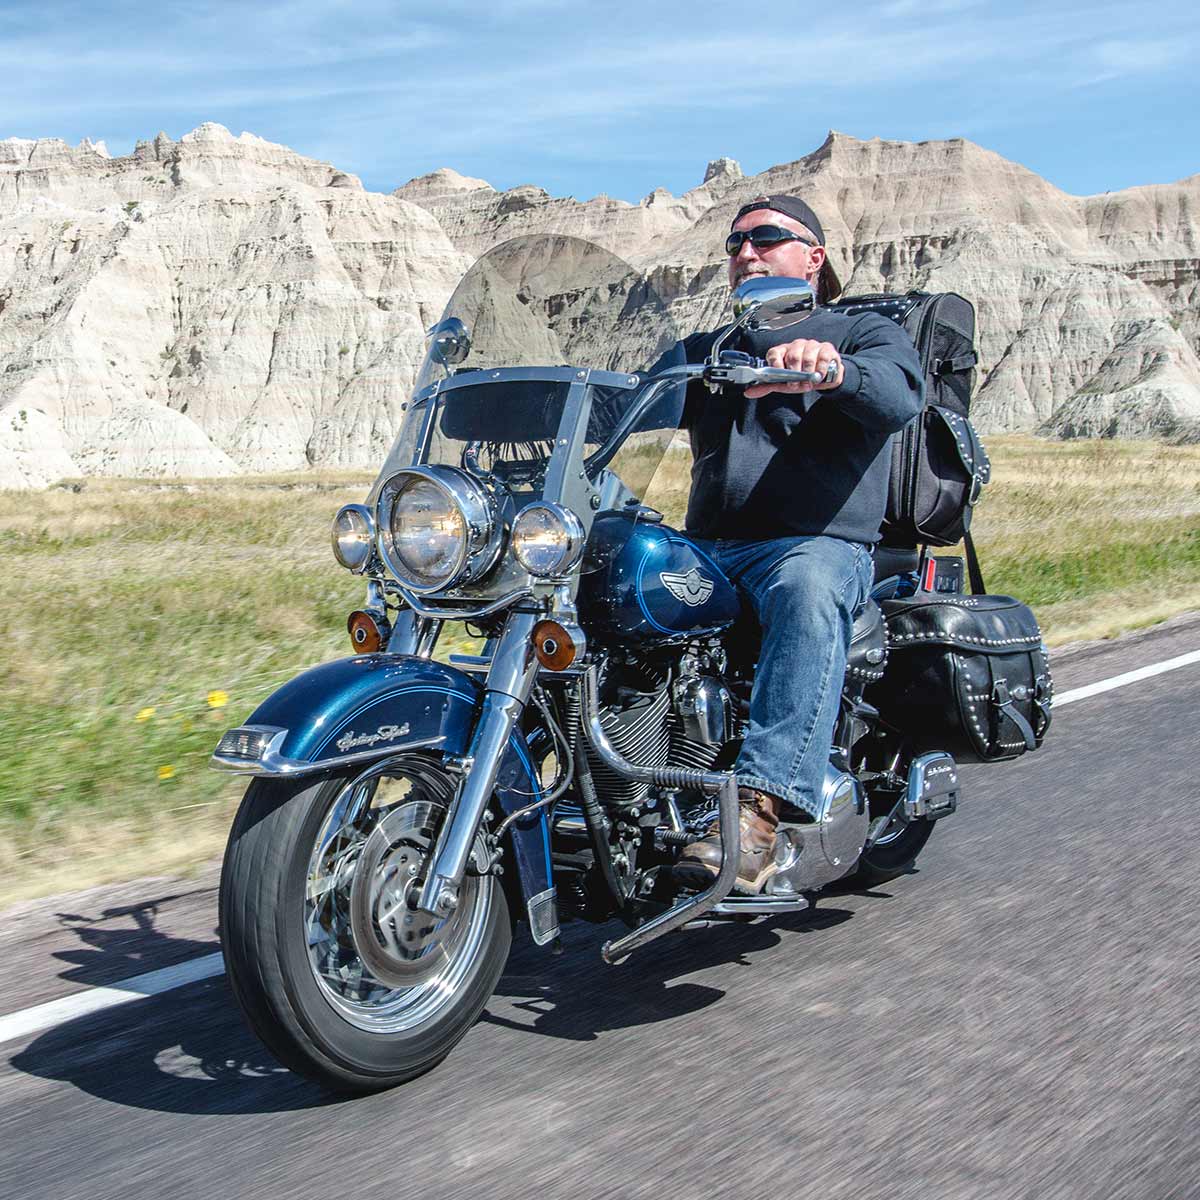 17" Tint Billboard Flare™ Windshield for Harley-Davidson® Softail motorcycle models